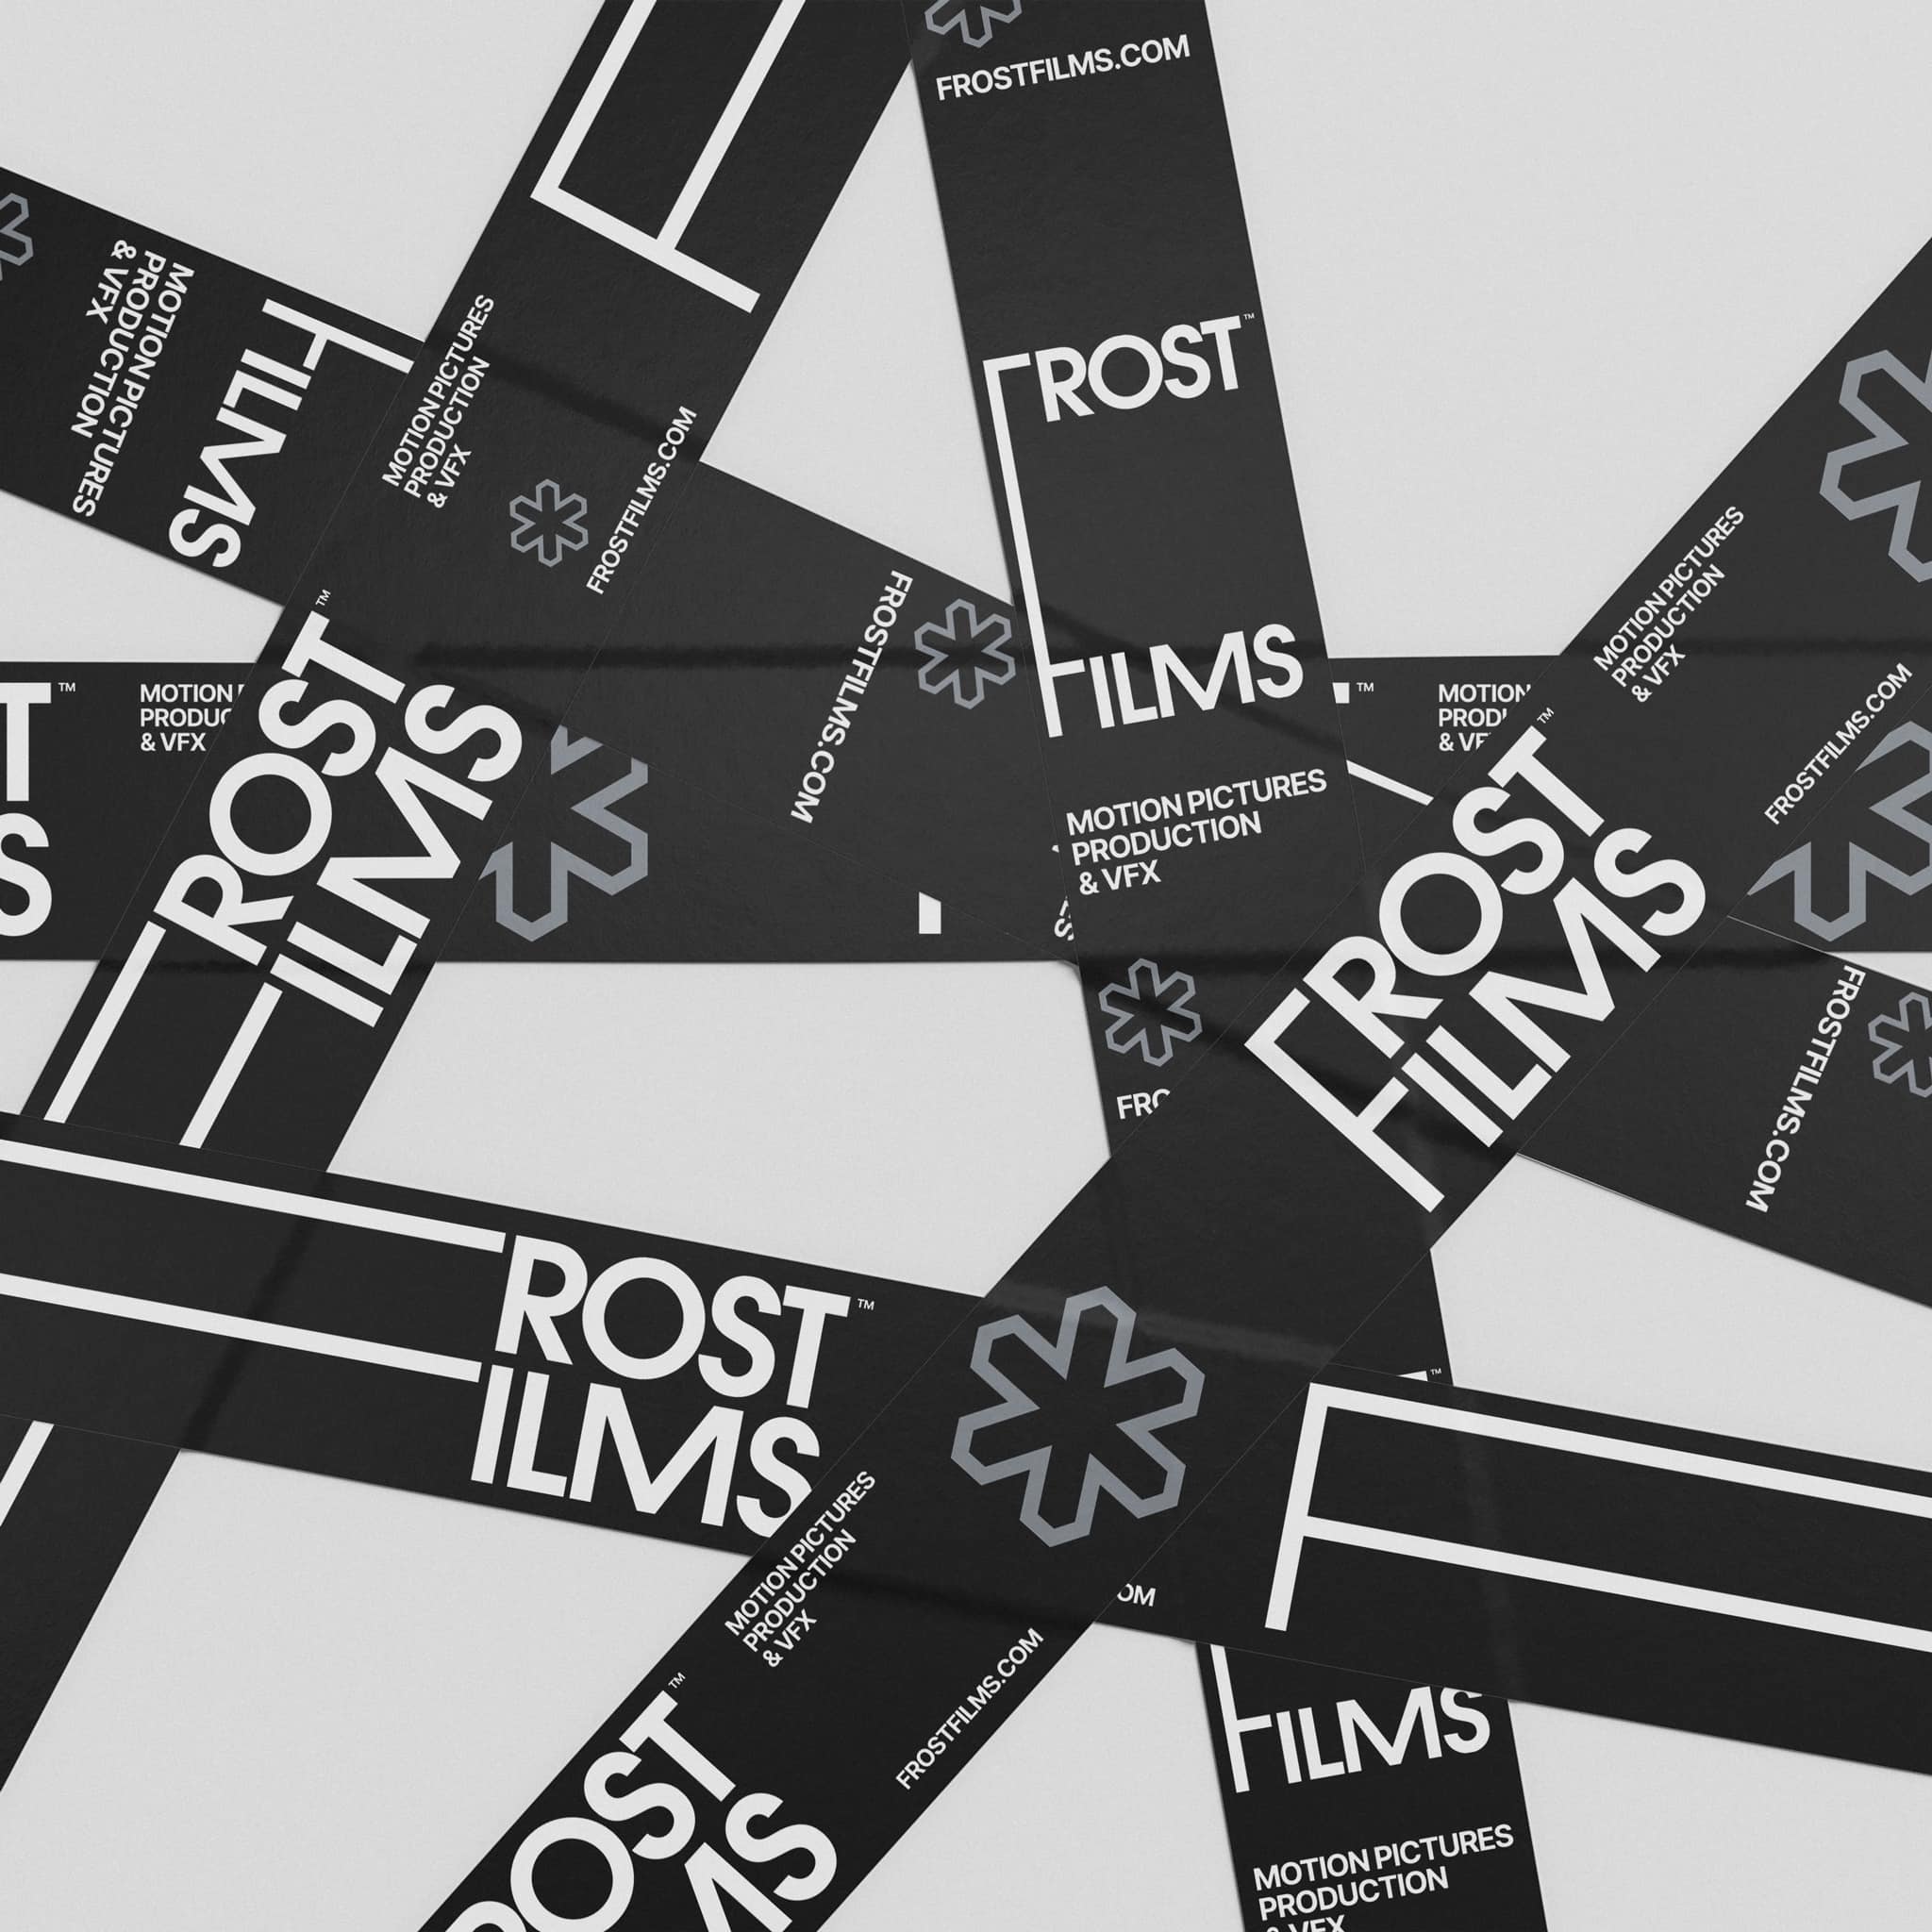 FrostFilms